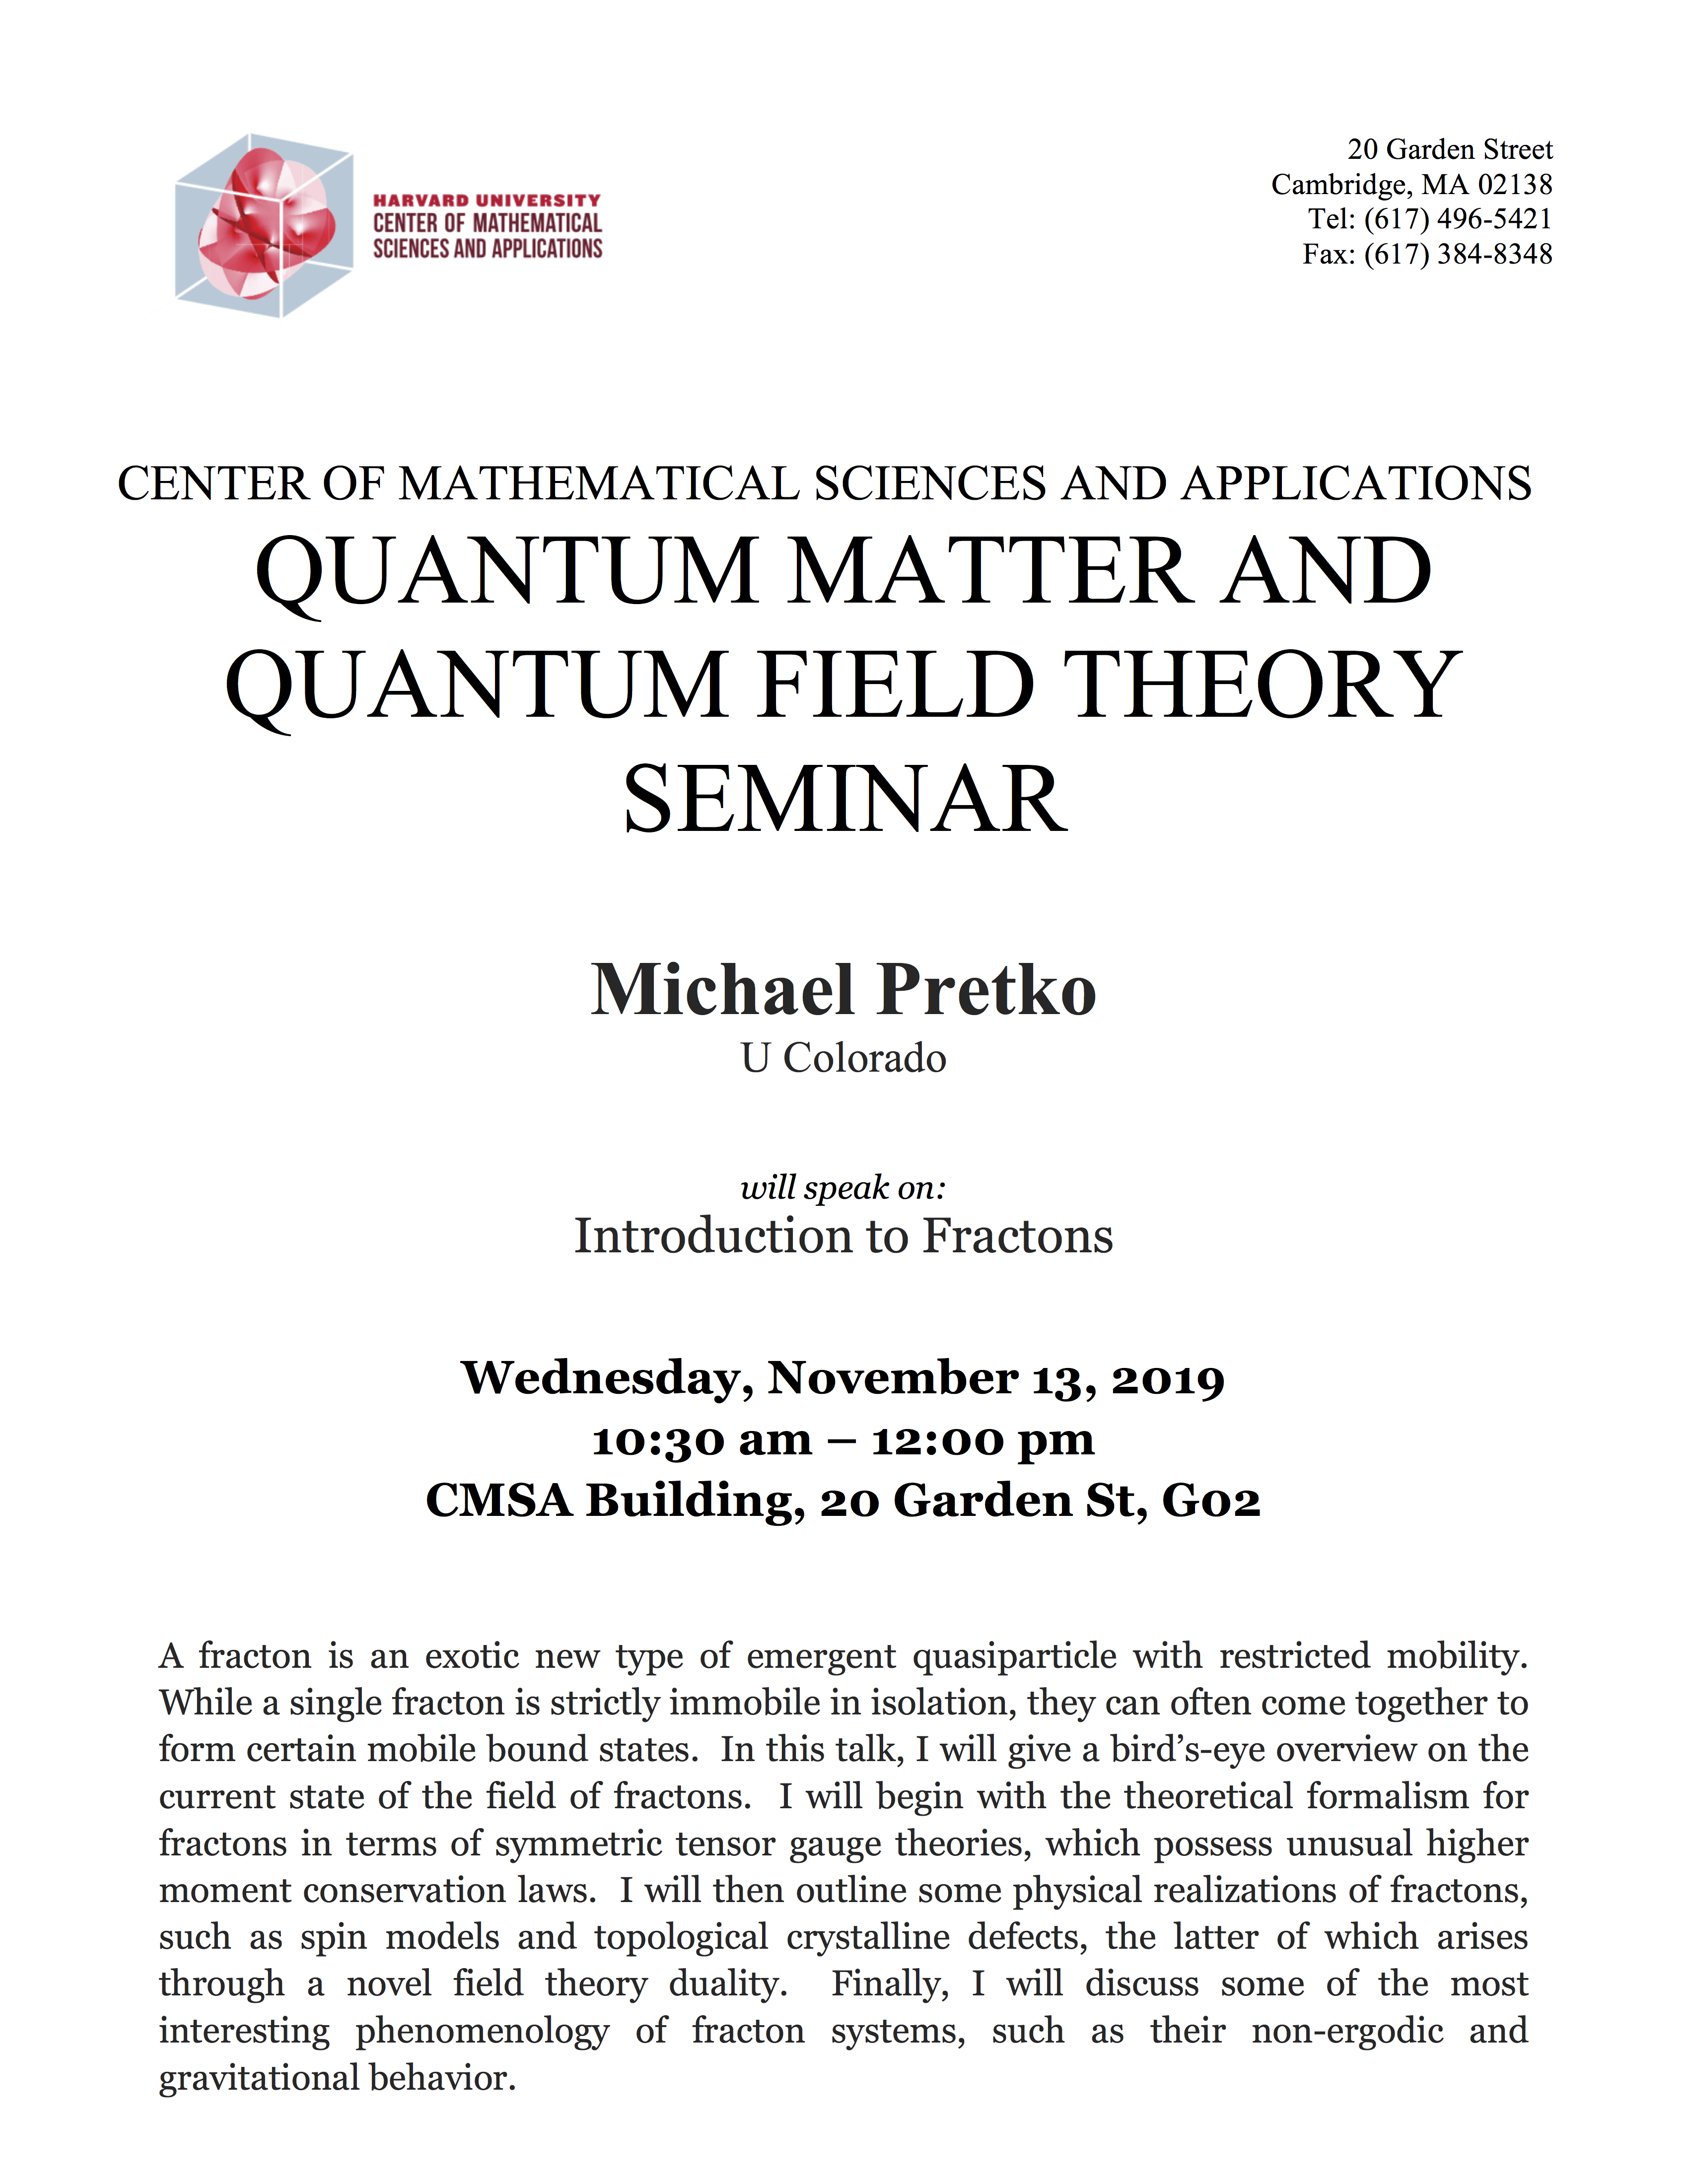 11/13/2019 Quantum Matter Seminar